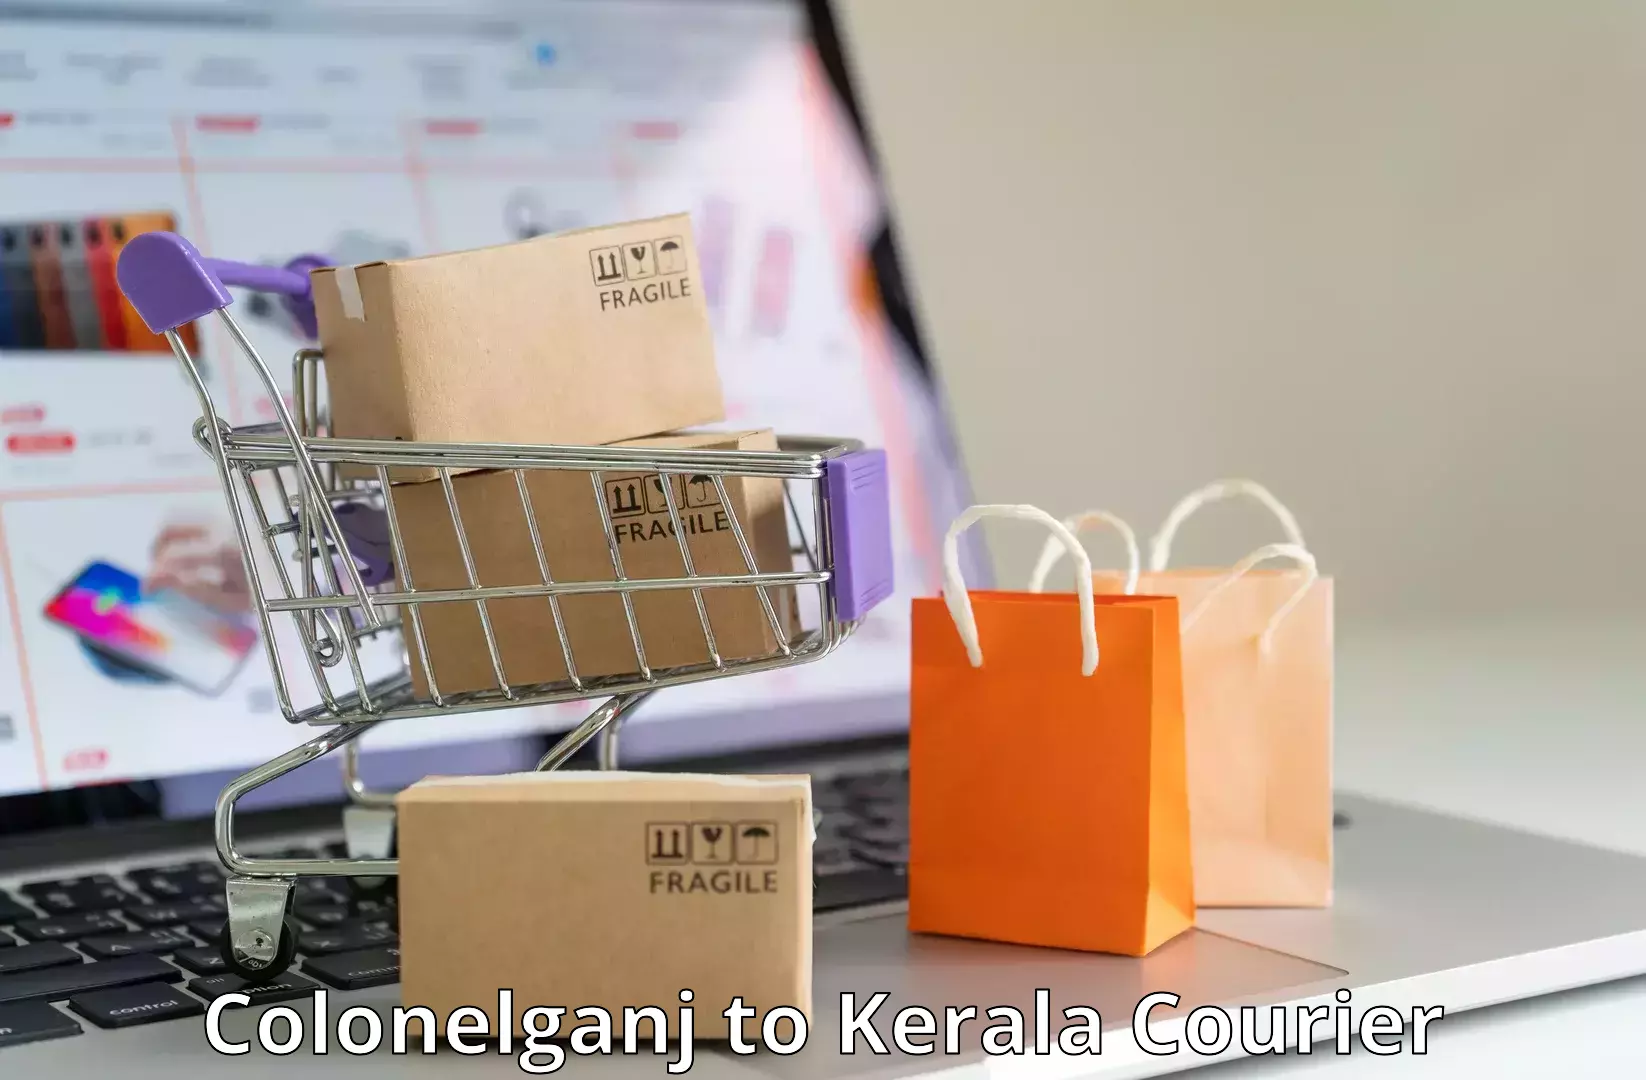 Express package handling Colonelganj to Kerala